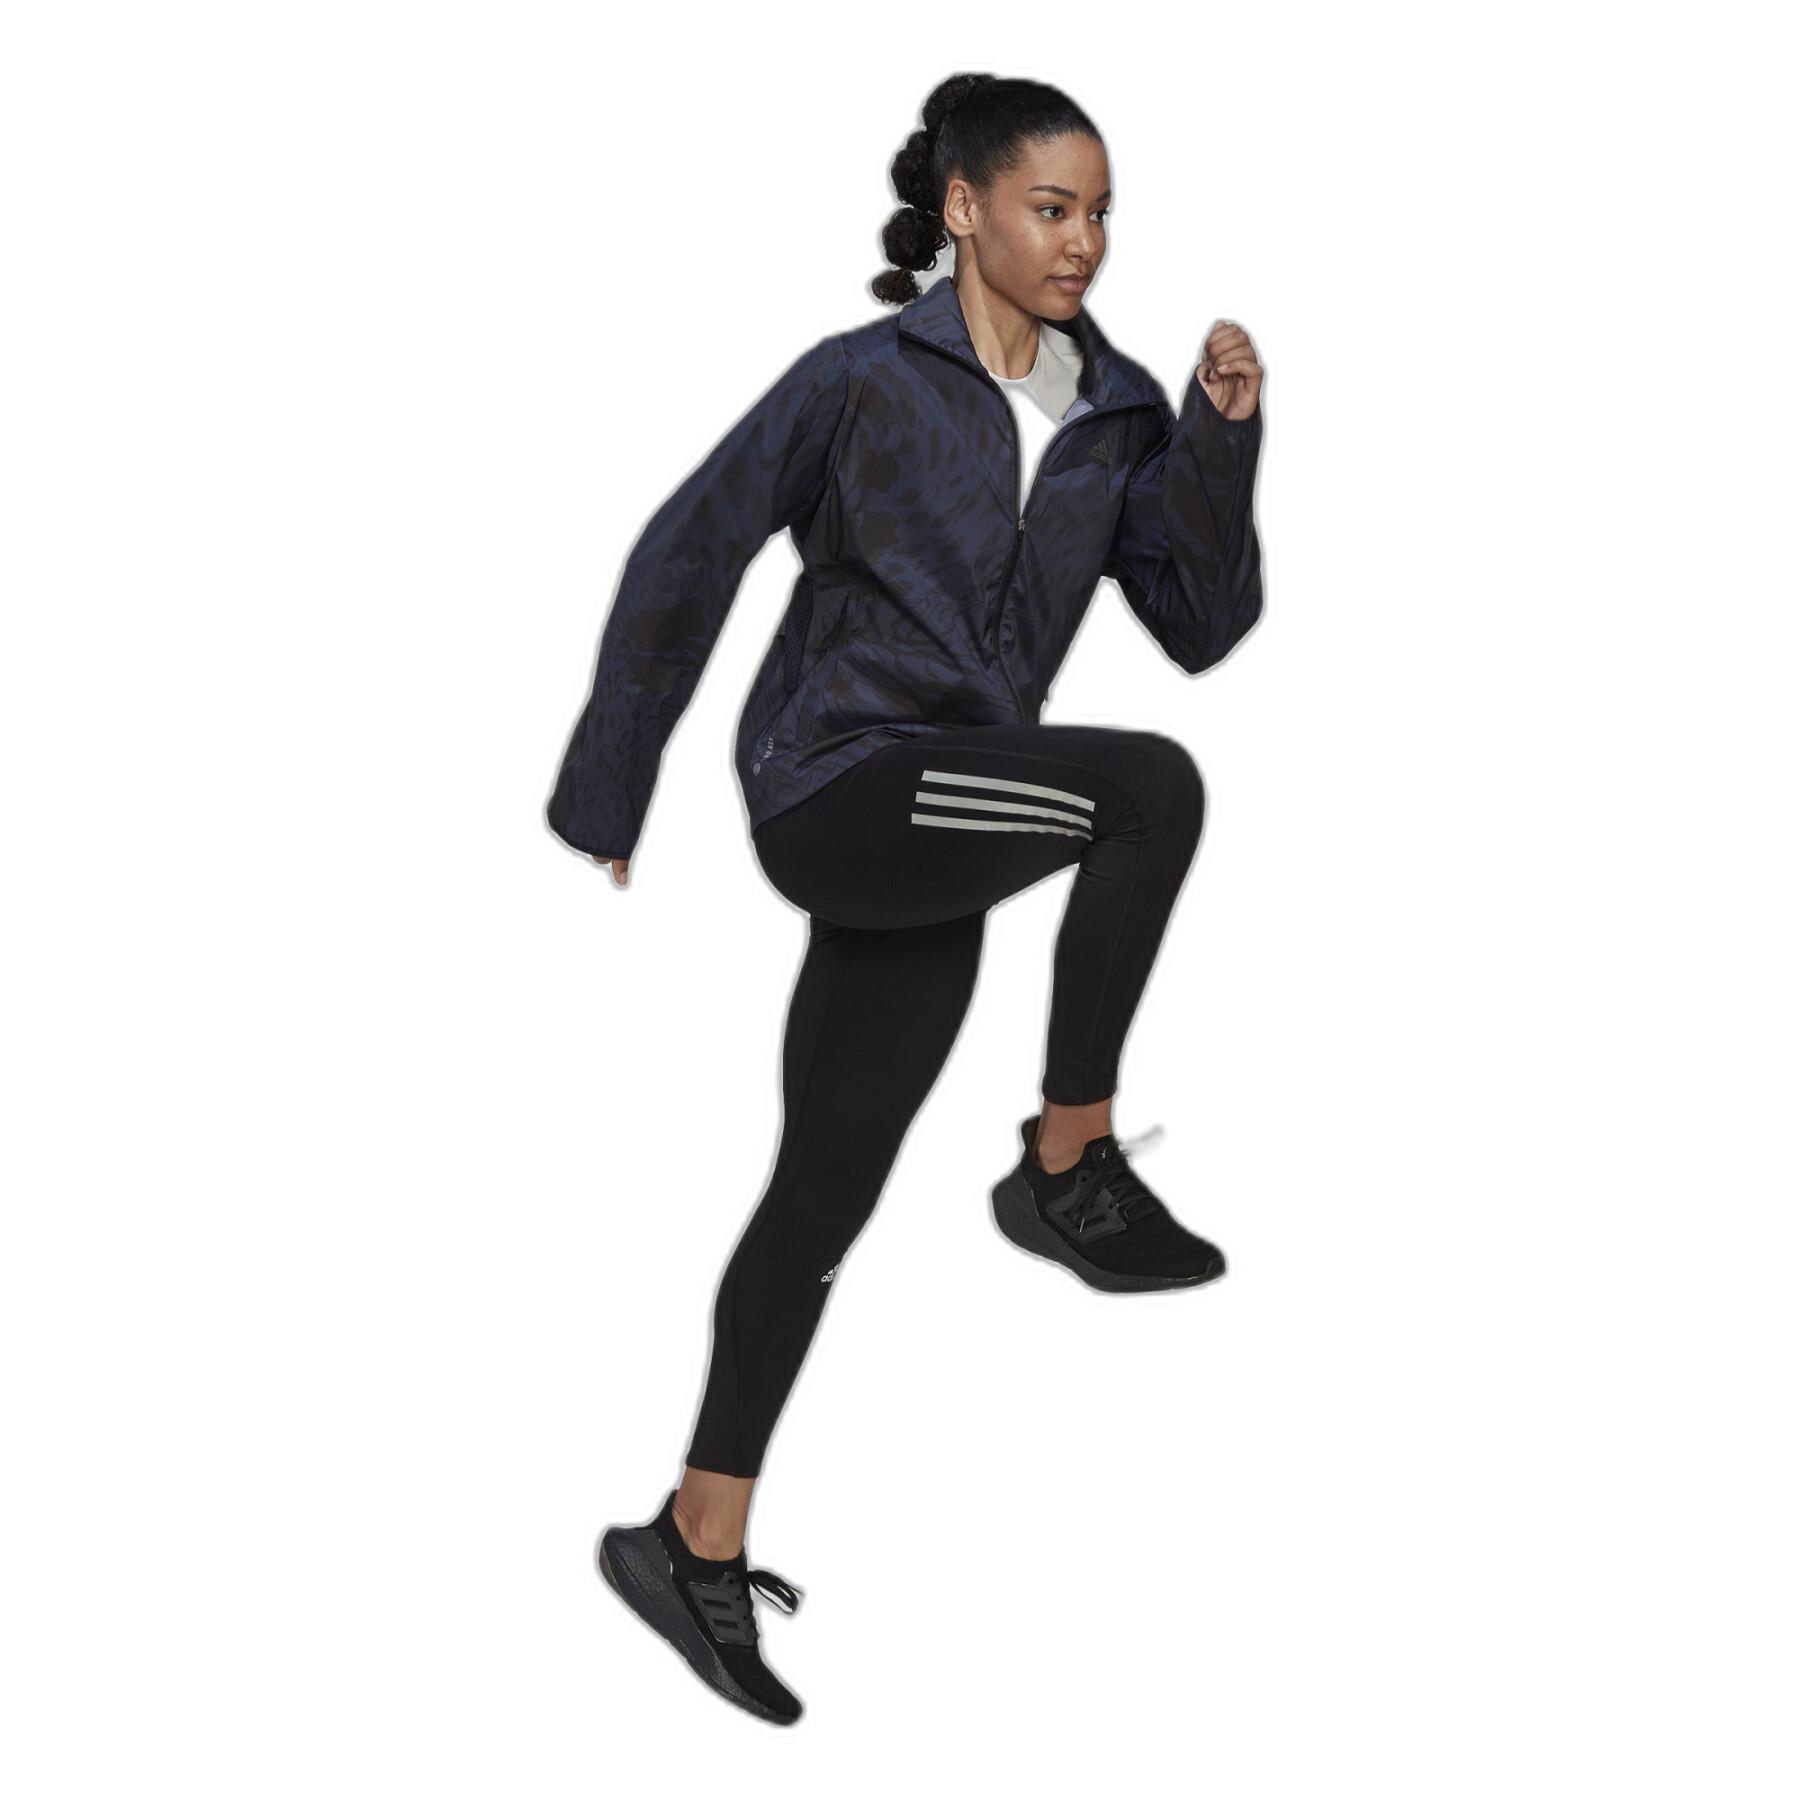 Women's fast running waterproof jacket adidas